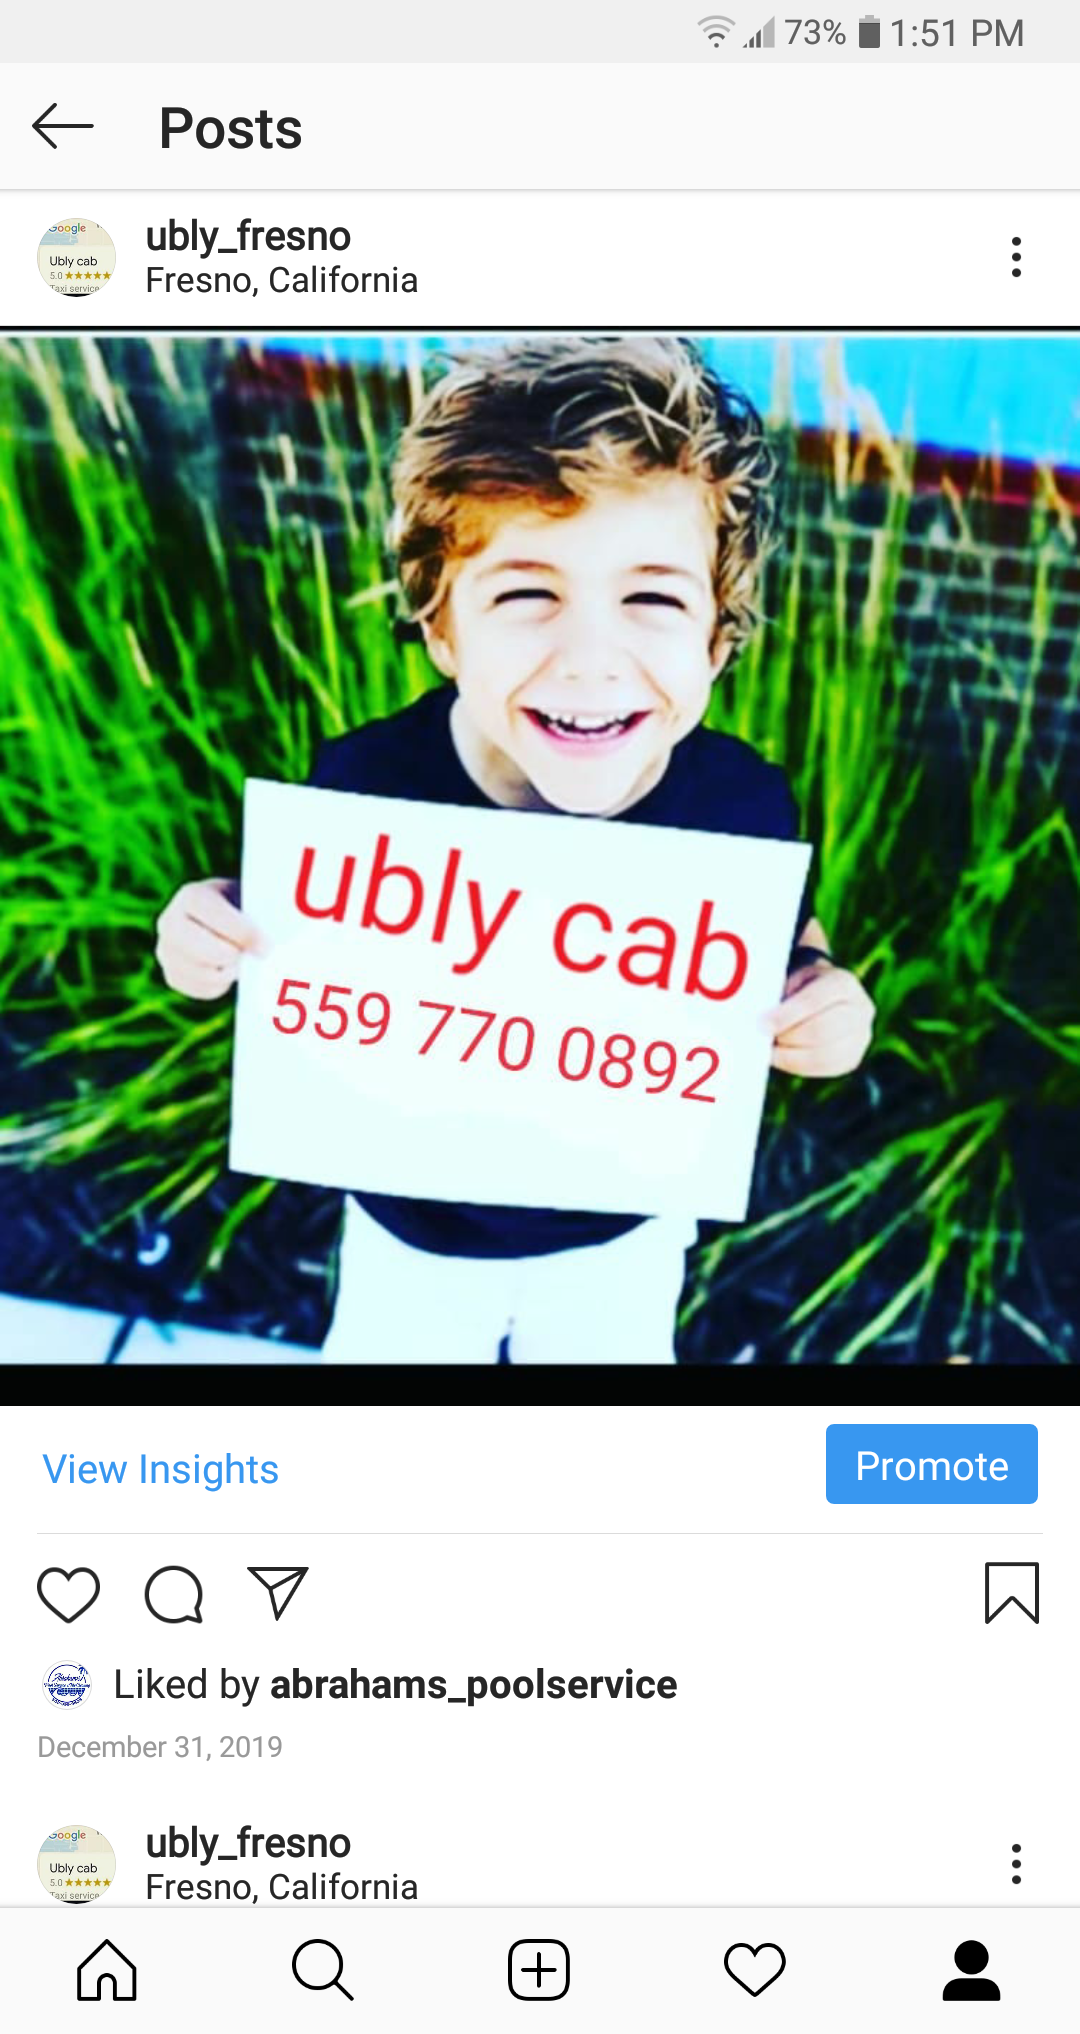 Ubly cab